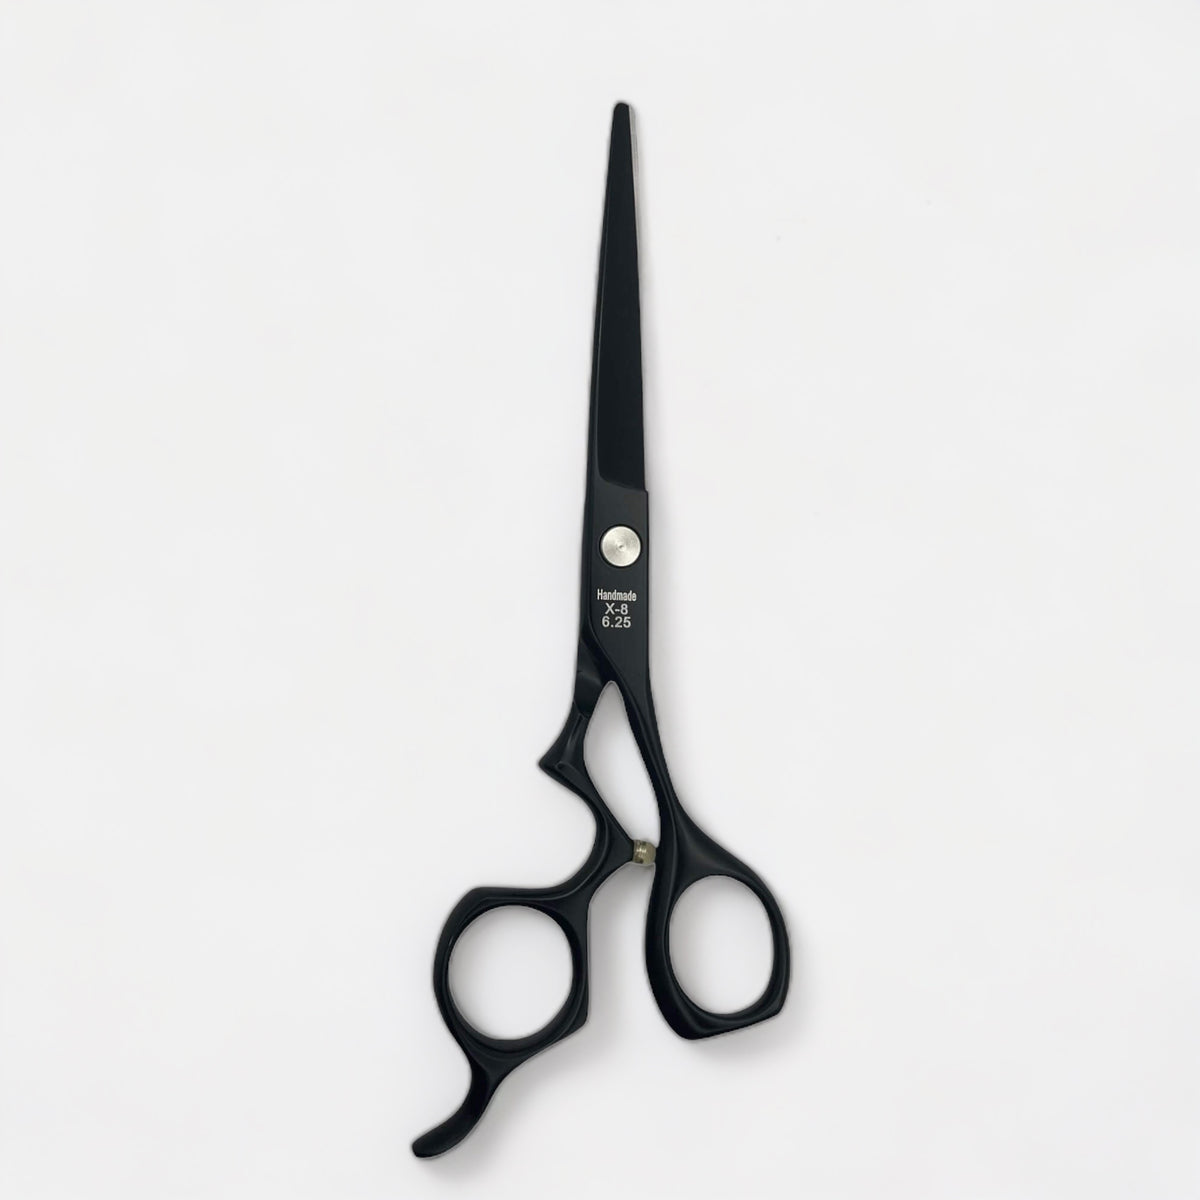 X-8 Black Hair Scissors back blade